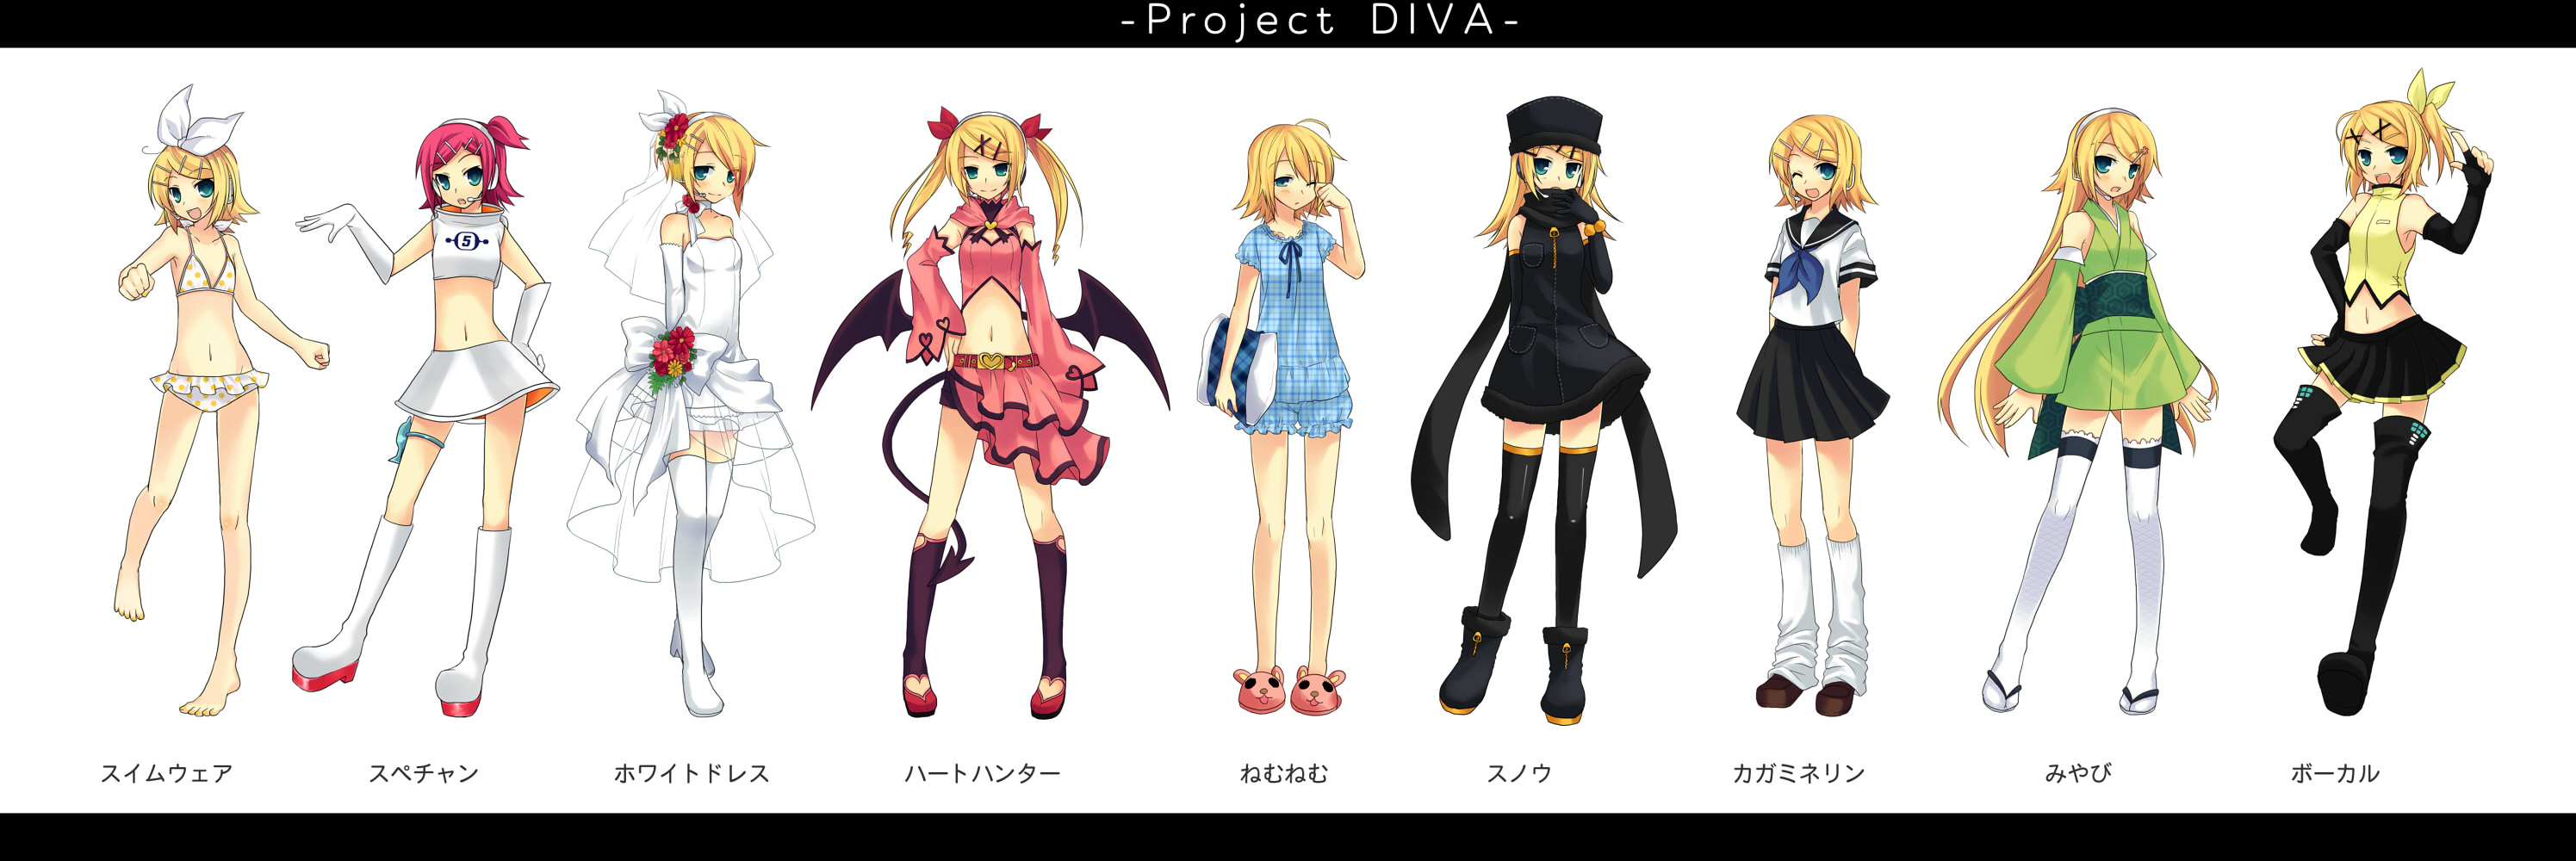 Handy-Wallpaper Vocaloid, Animes, Rin Kagamine, Projekt Diva kostenlos herunterladen.